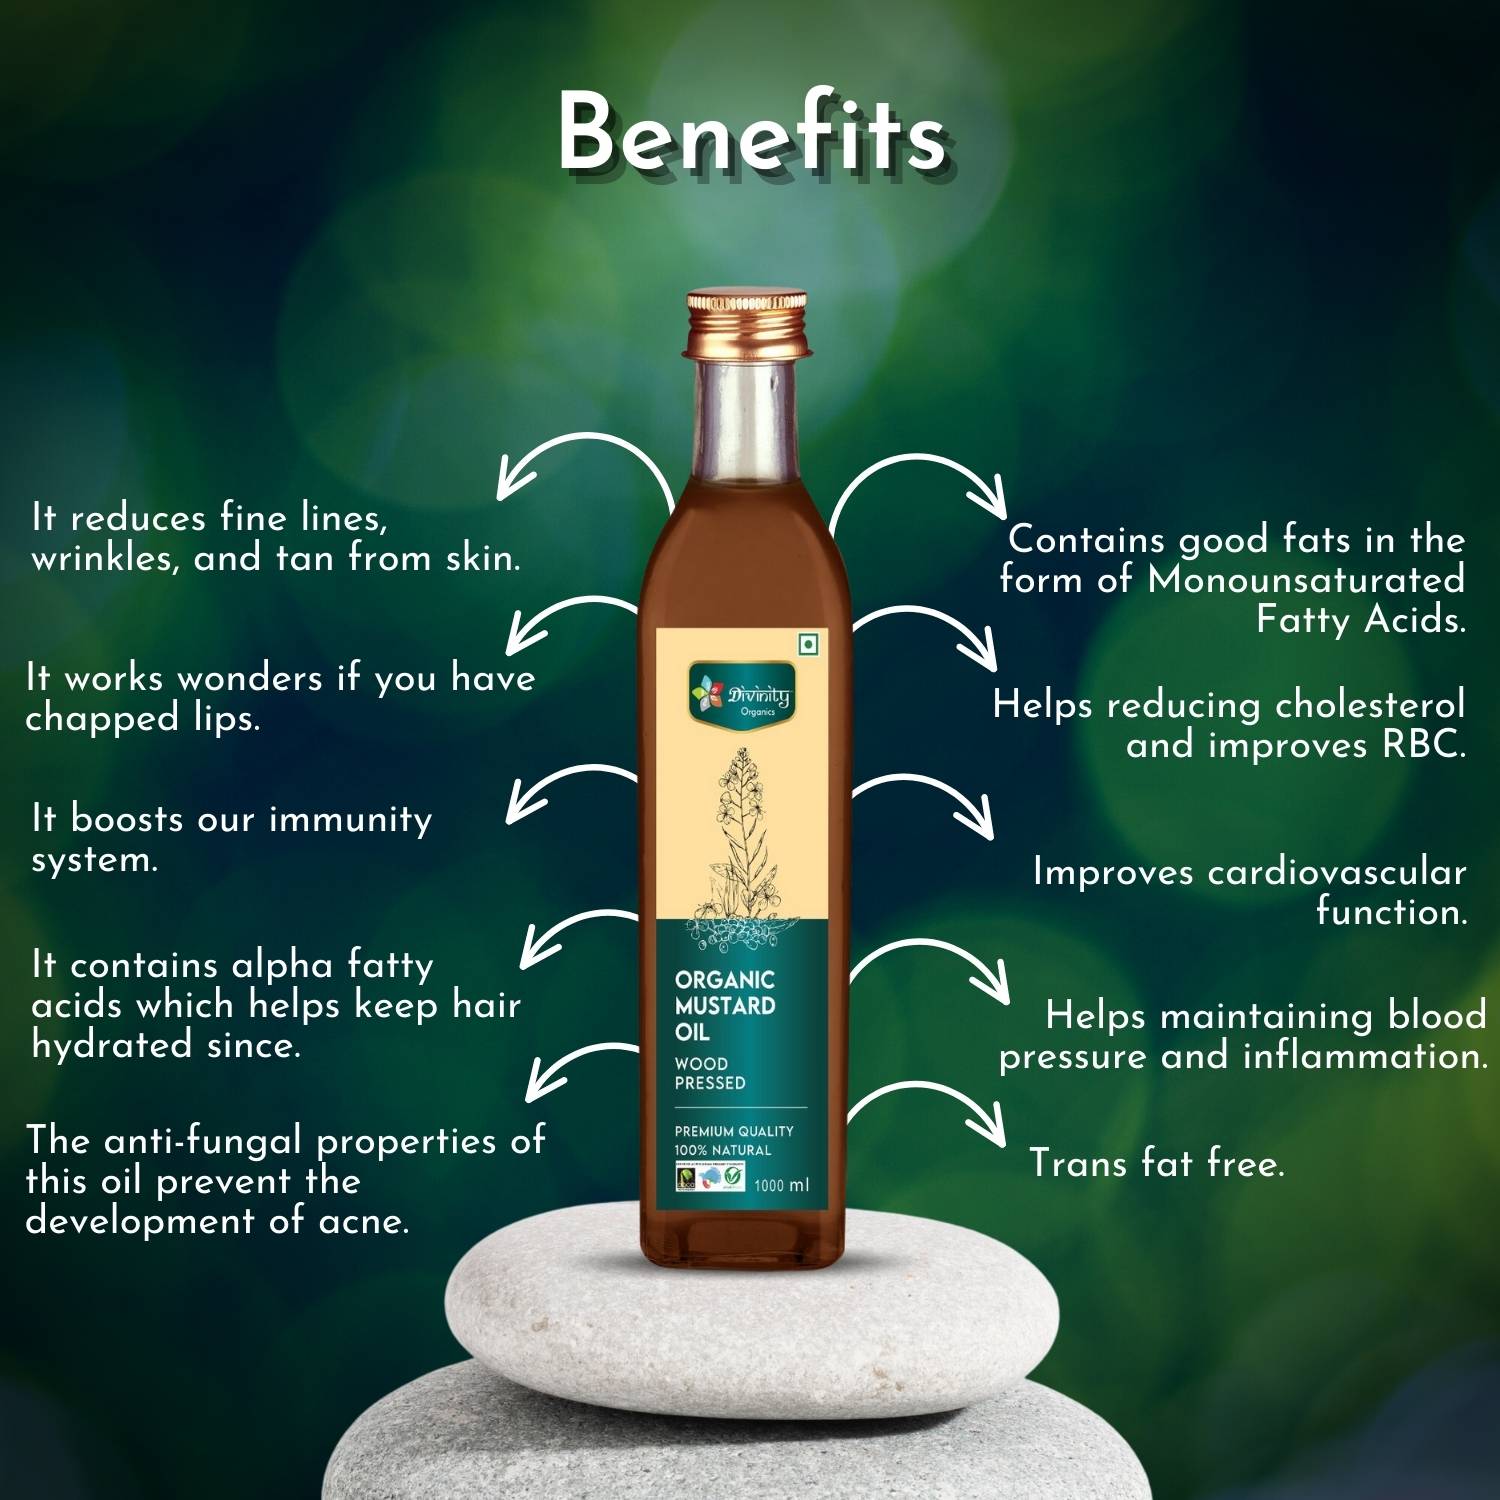 Divinity Organics - Organic Mustard Oil Wood Pressed Benefits